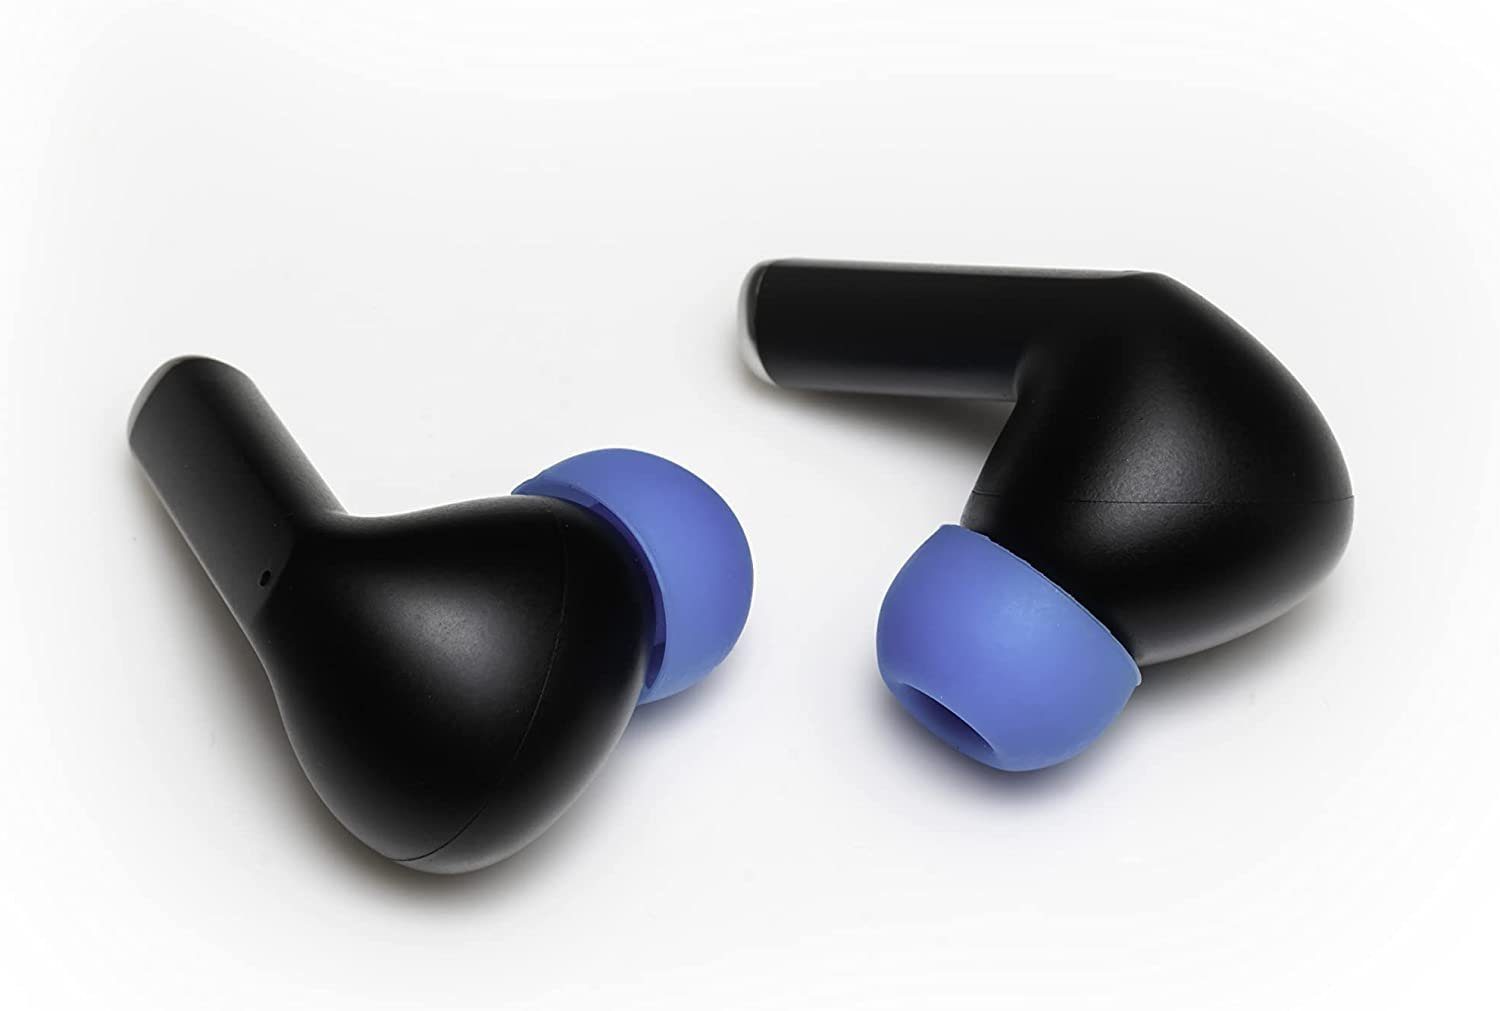 Blaupunkt TWS 20 schwarz In-Ear-Kopfhörer Bluetooth) (Google-Assistant, Siri